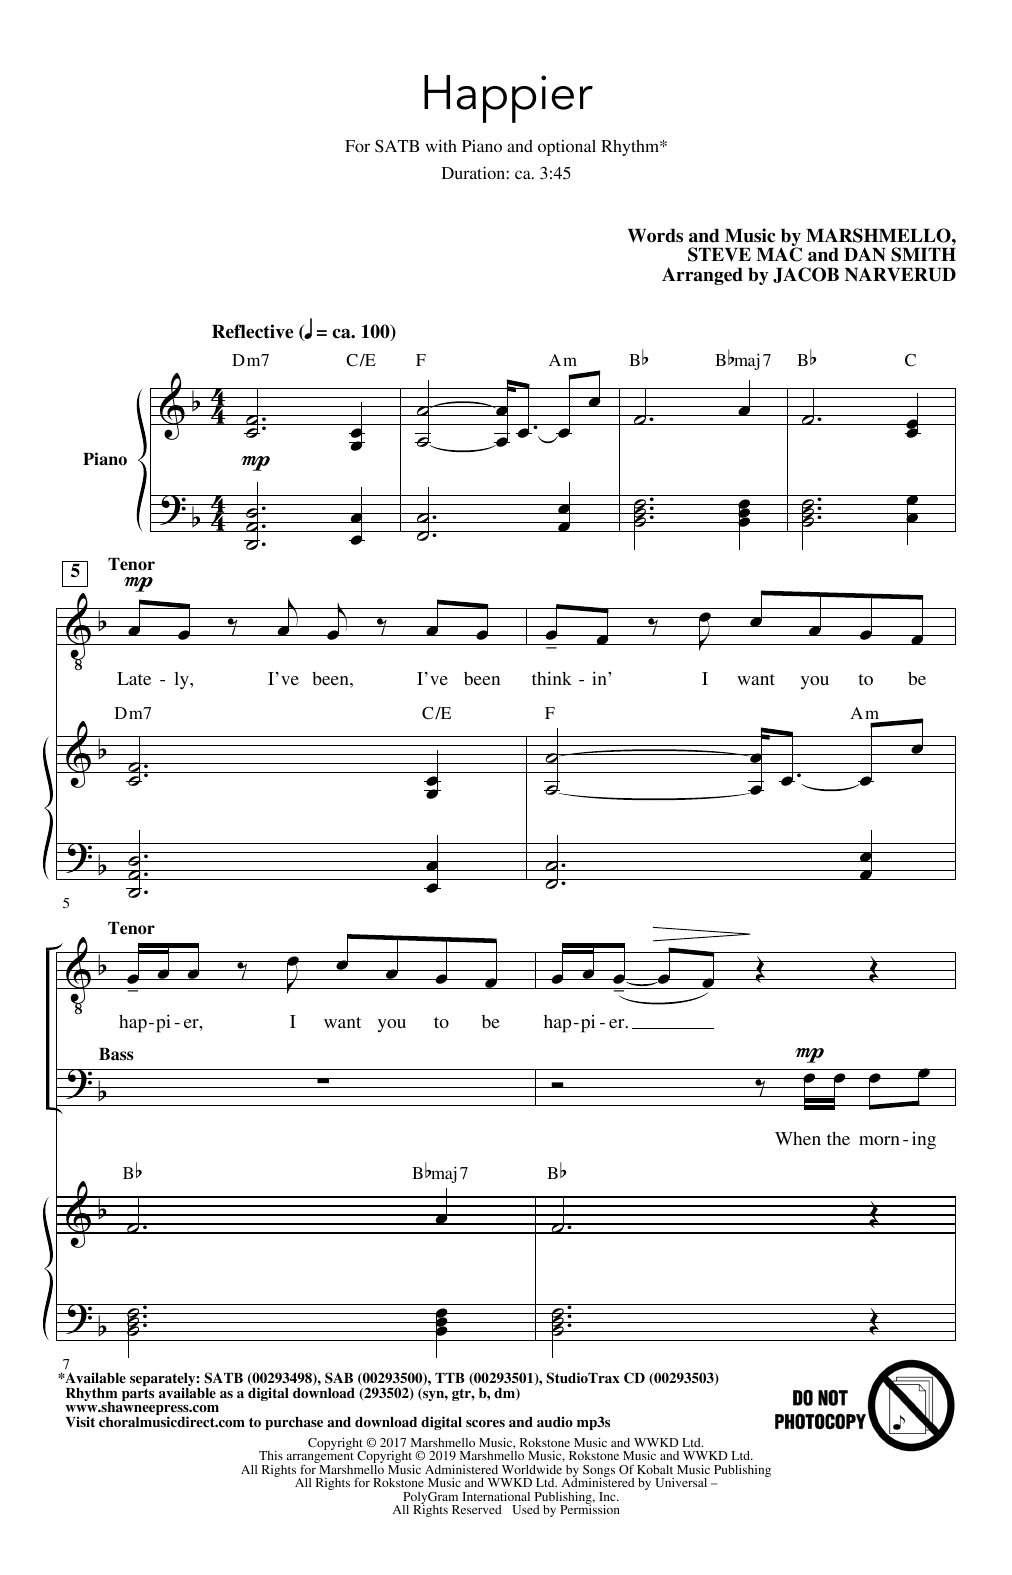 Marshmello & Bastille Happier (arr. Jacob Narverud) Sheet Music Notes & Chords for SATB Choir - Download or Print PDF